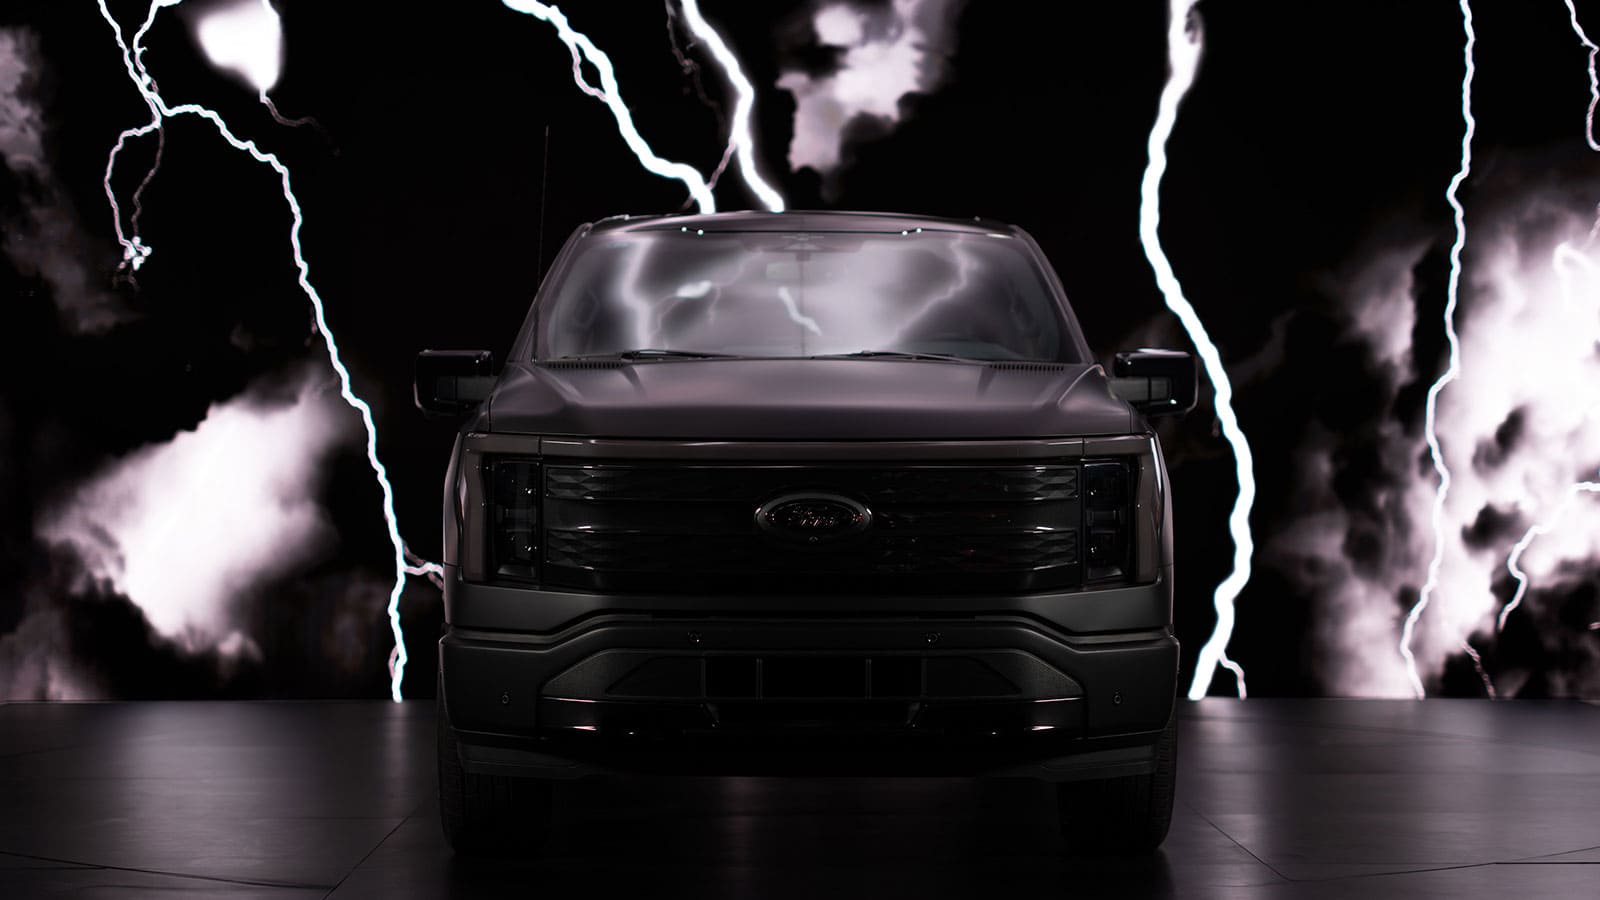 Ford f-150 lightning platinum black front view with lightning background